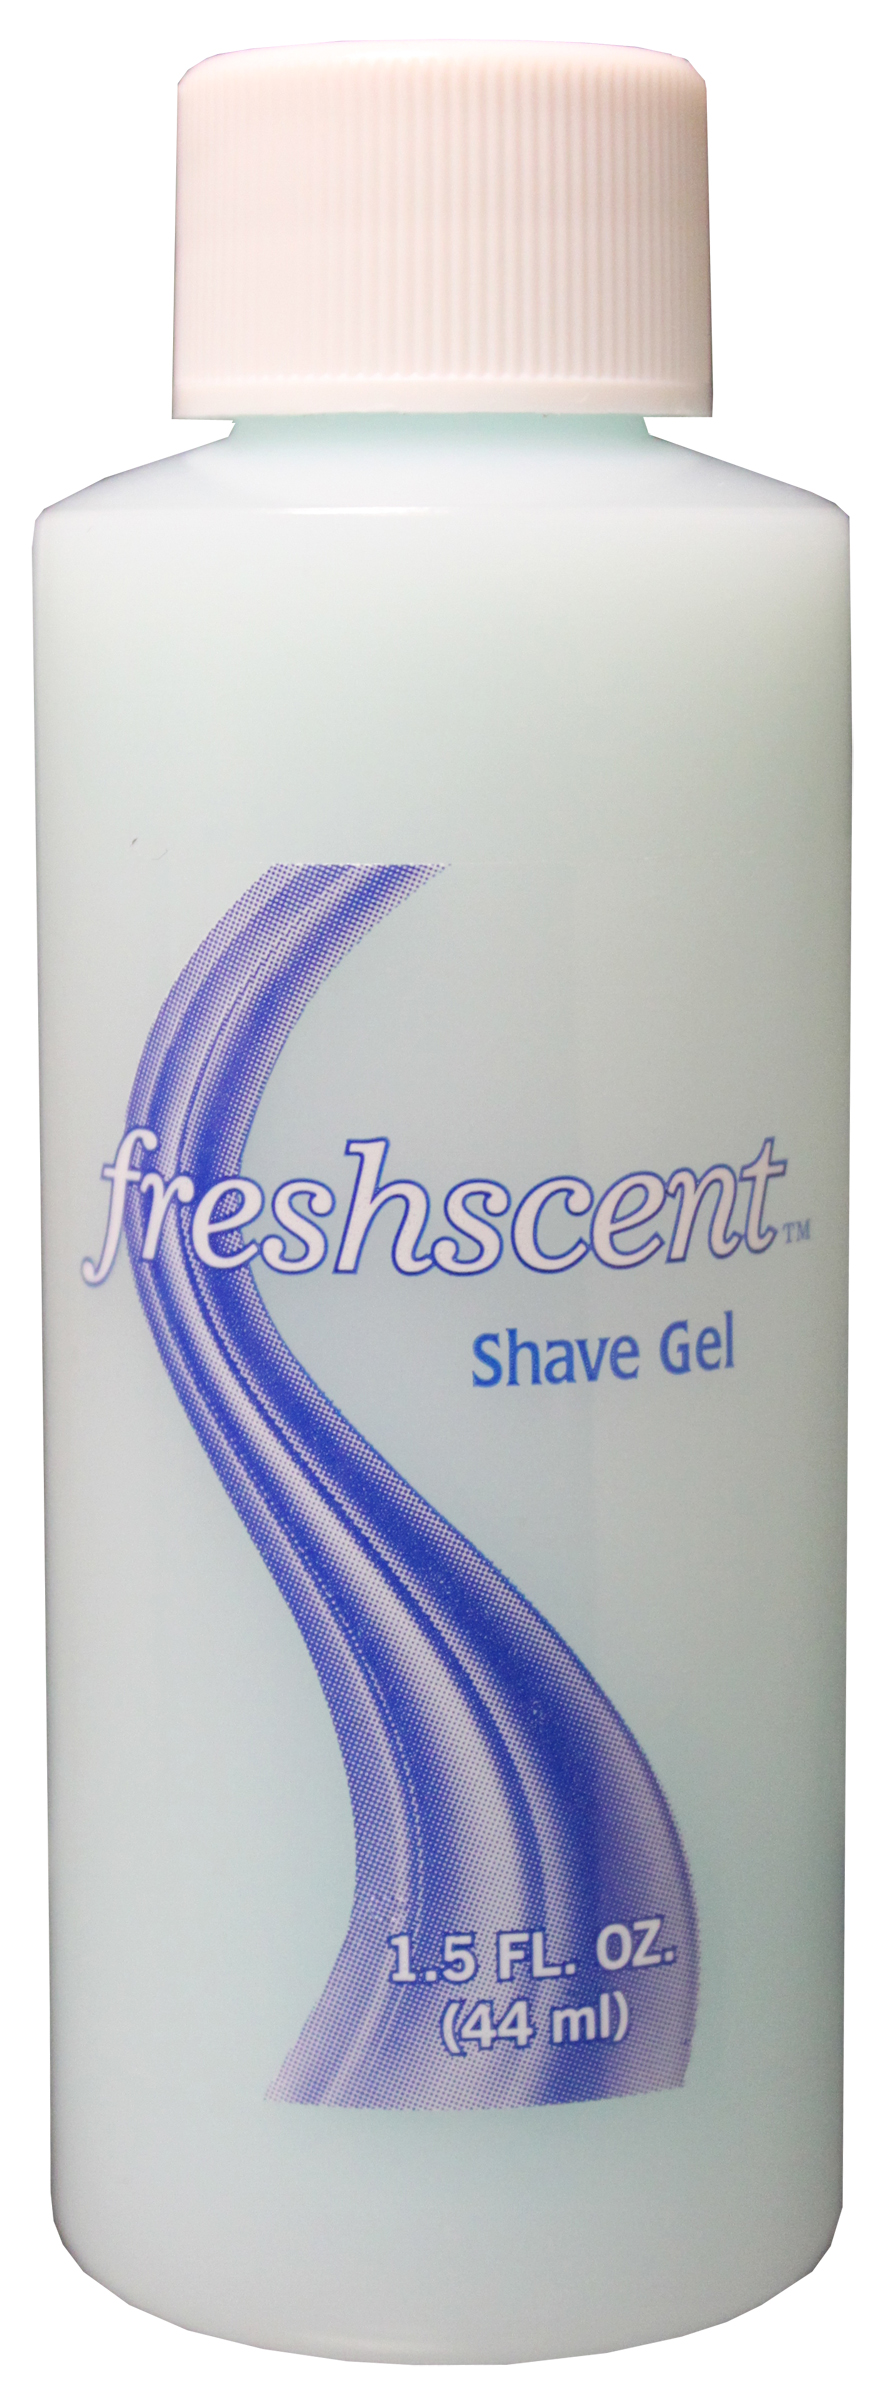 Freshscent 1.5 oz. Shave Gel